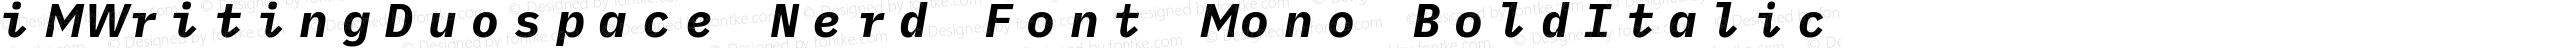 iM Writing Duospace BoldItalic Nerd Font Complete Mono